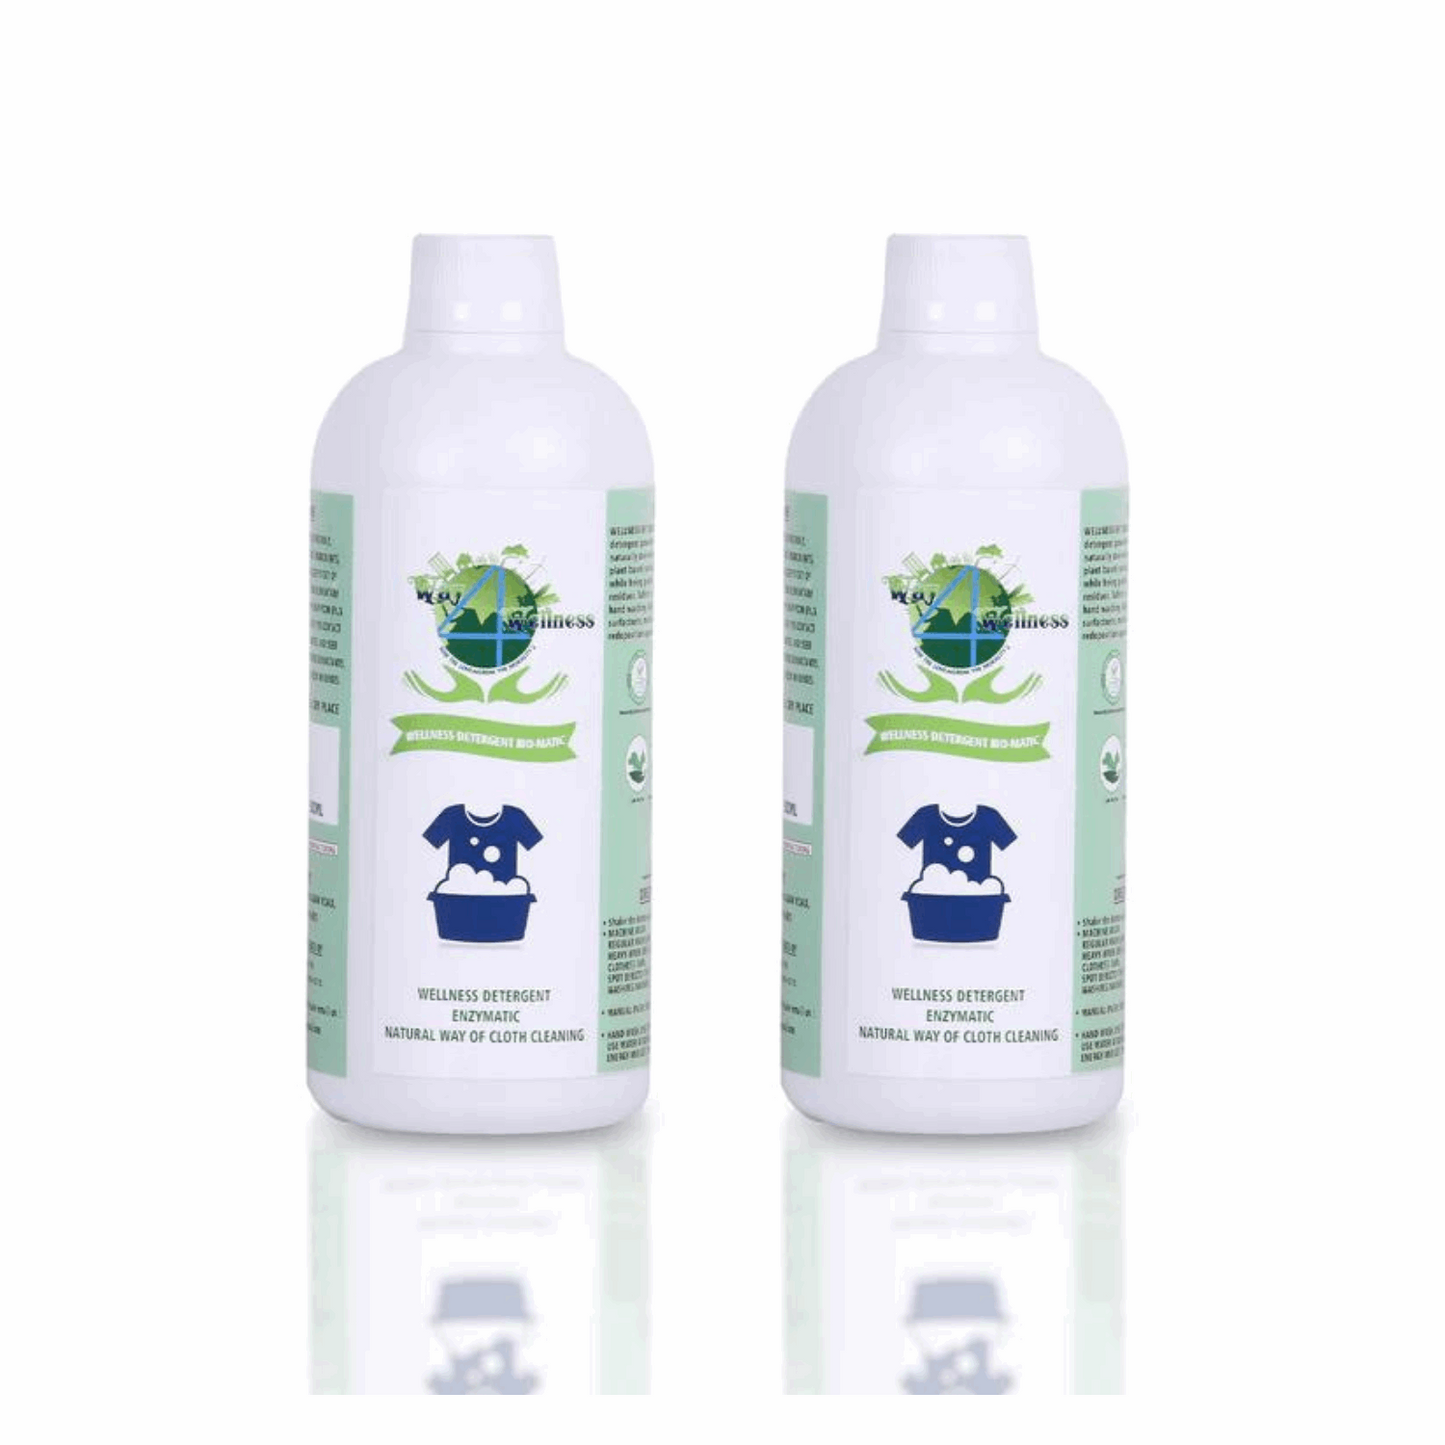 Wellness Detergent Bio-matic (Pack of 2 -500ML each )